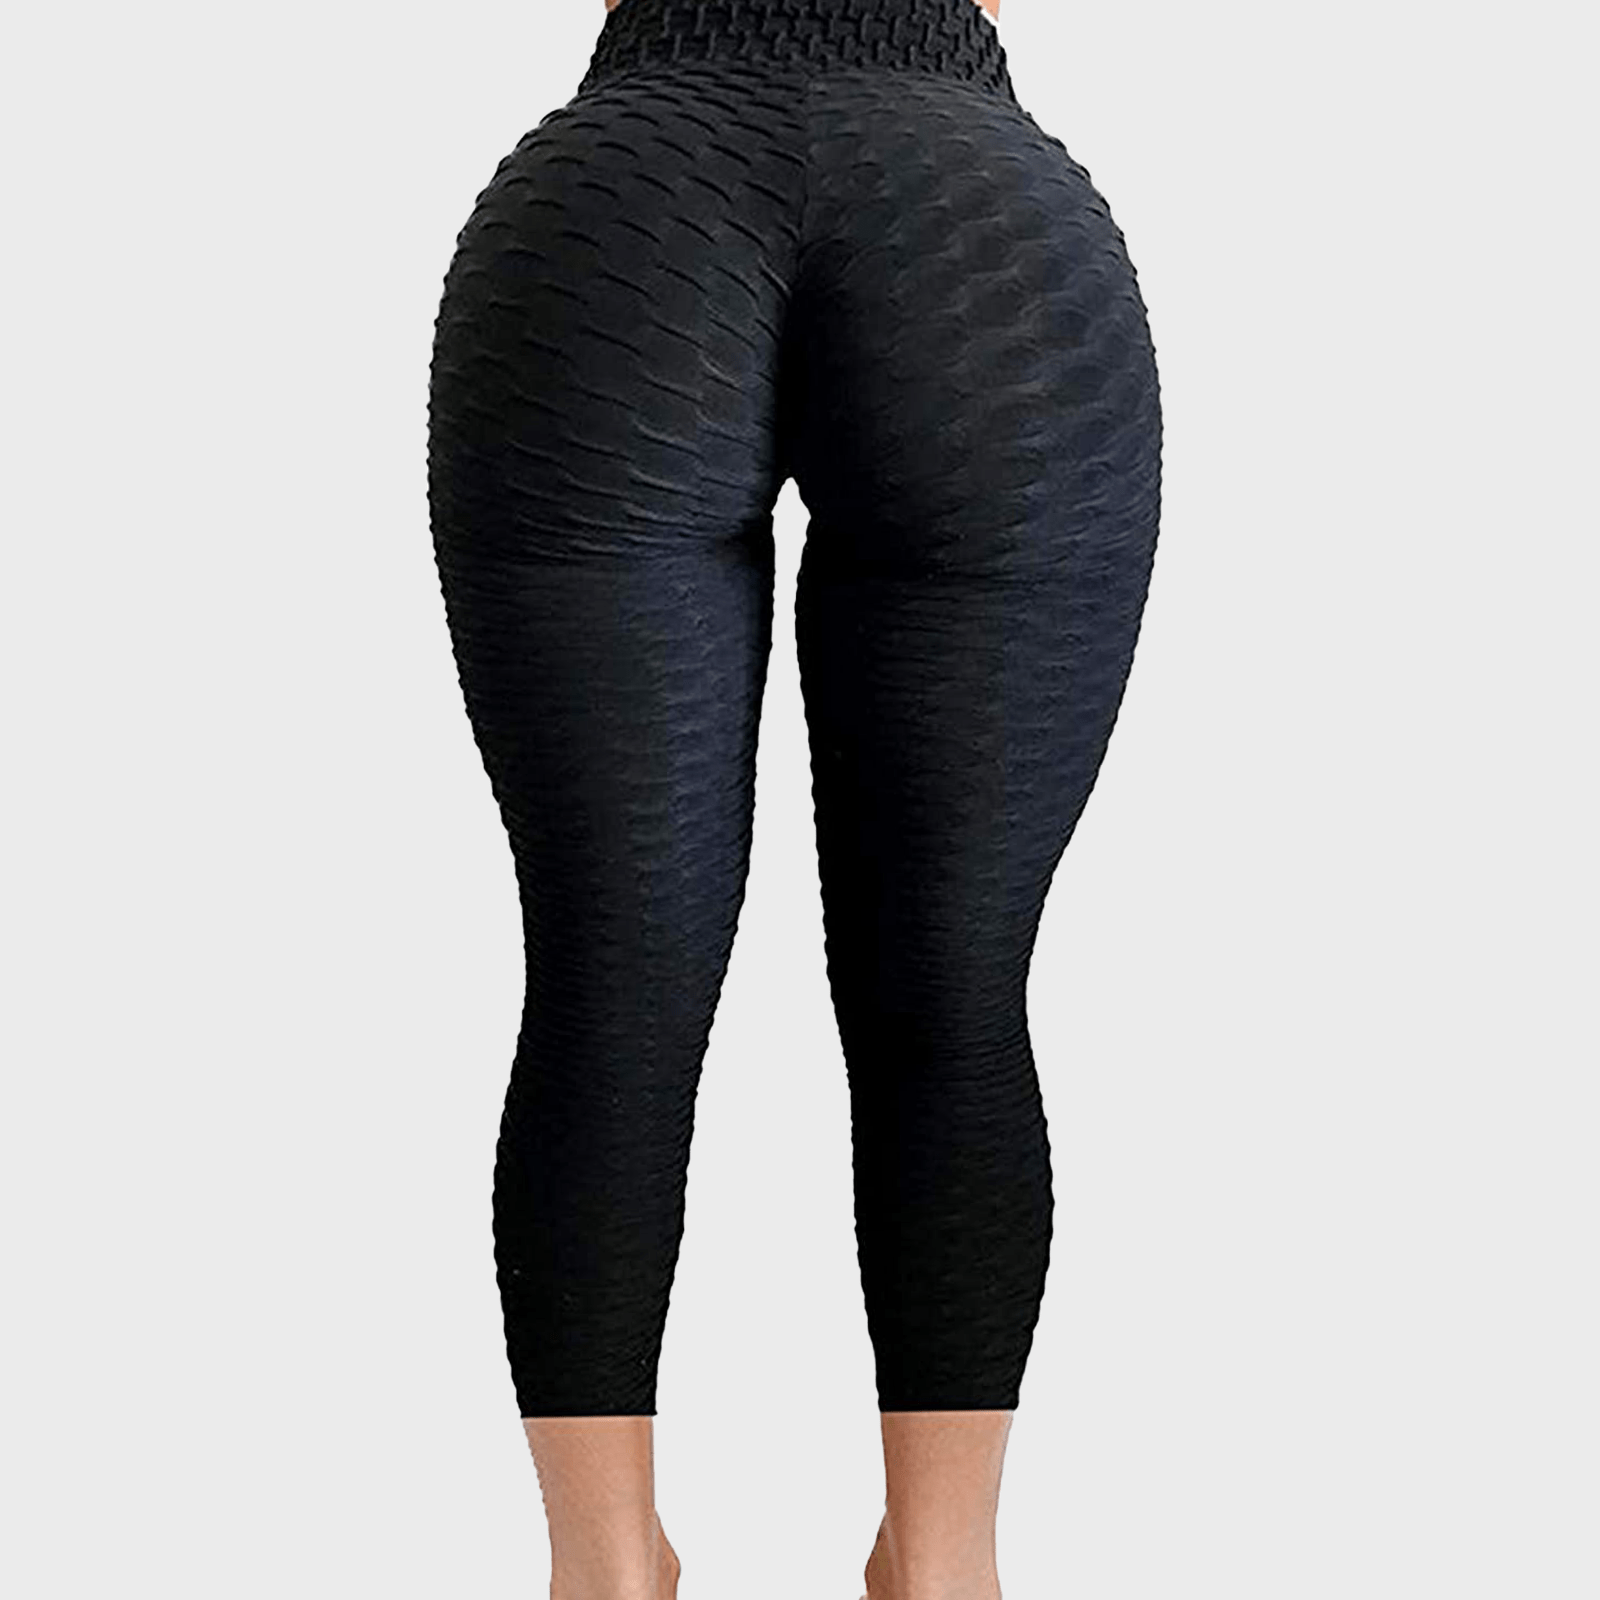 Women's Yoga Pants Scrunch Butt Ruched Butt Lifting Pocket Tummy Control  Butt Lift 4 Way Stretch High Waist Fitness Gym Workout Running Tights  Legging